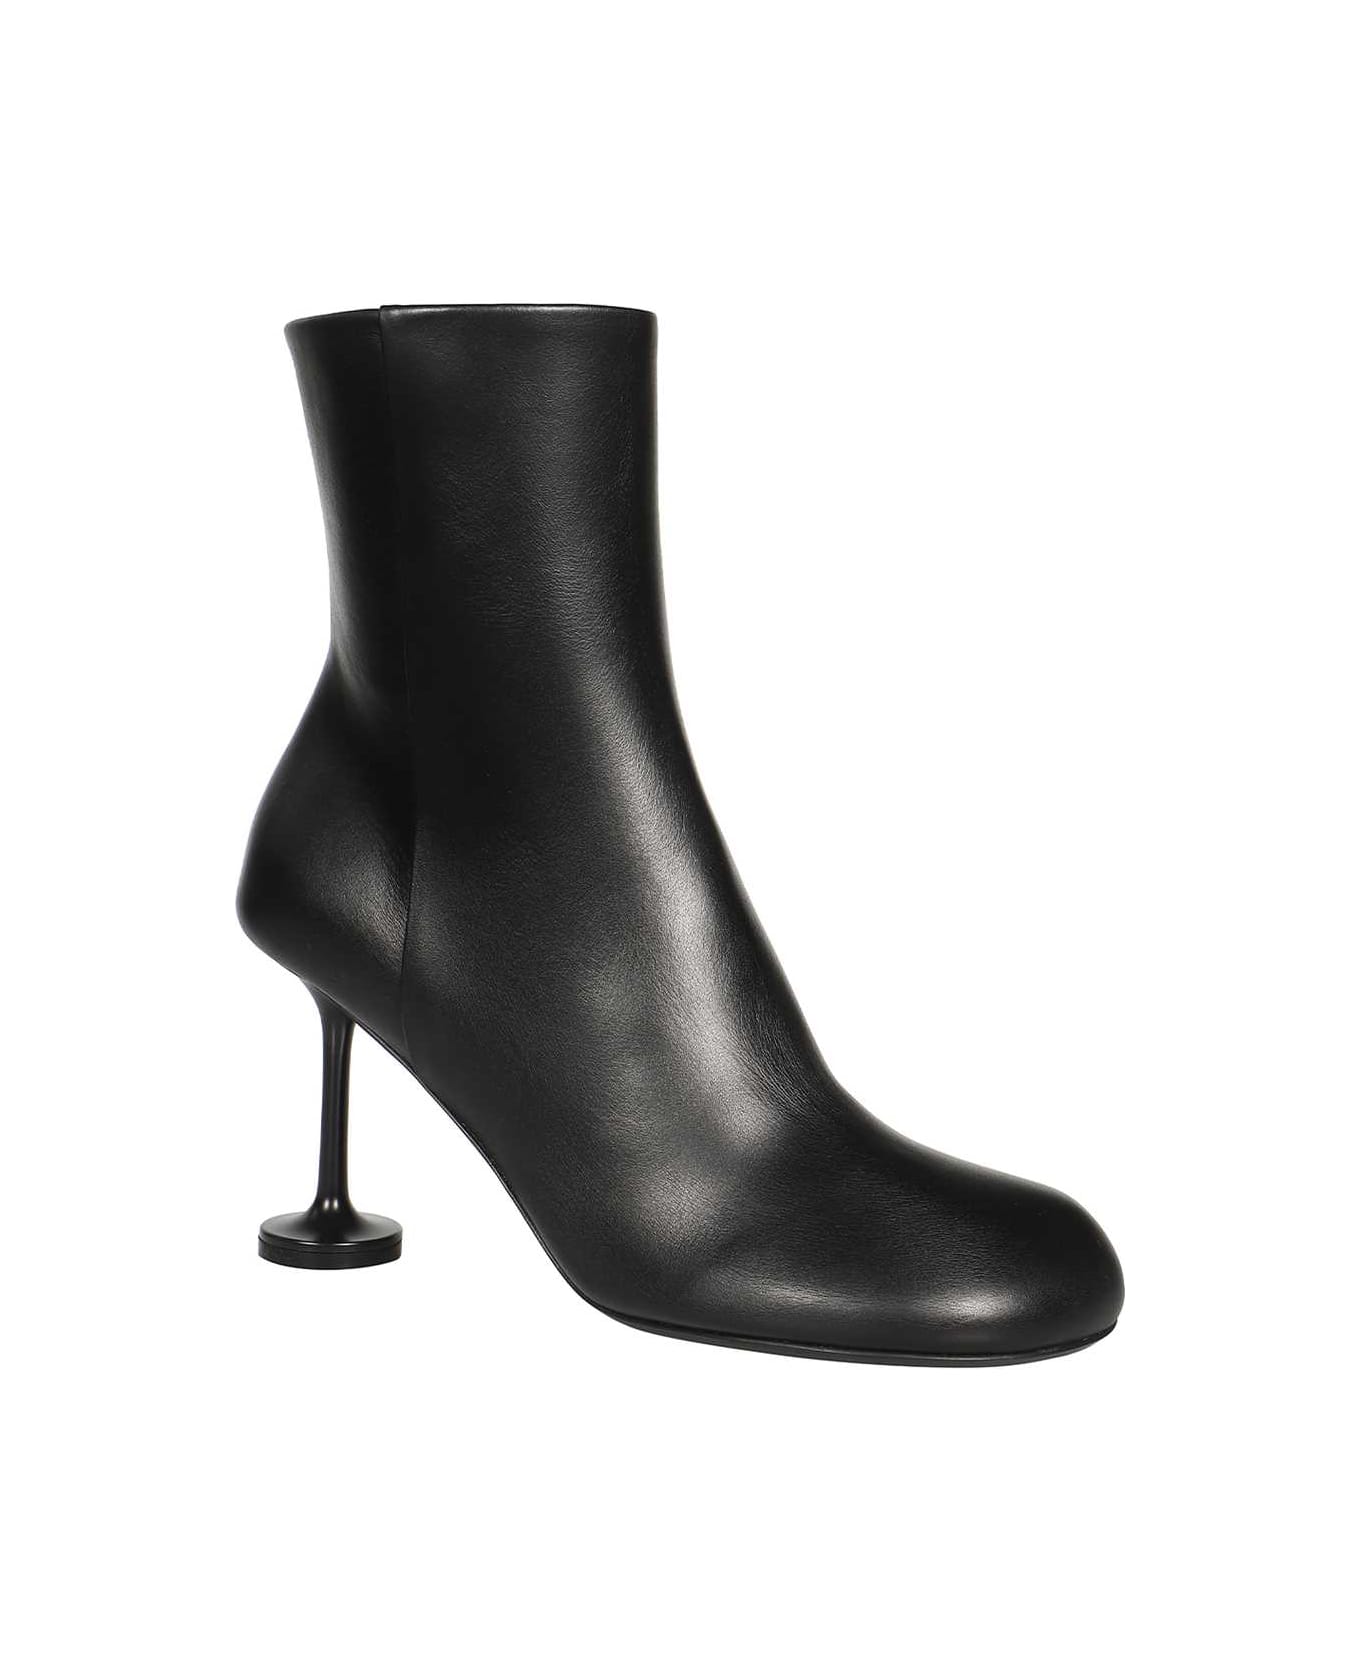 Balenciaga Leather Ankle Boots - black ブーツ